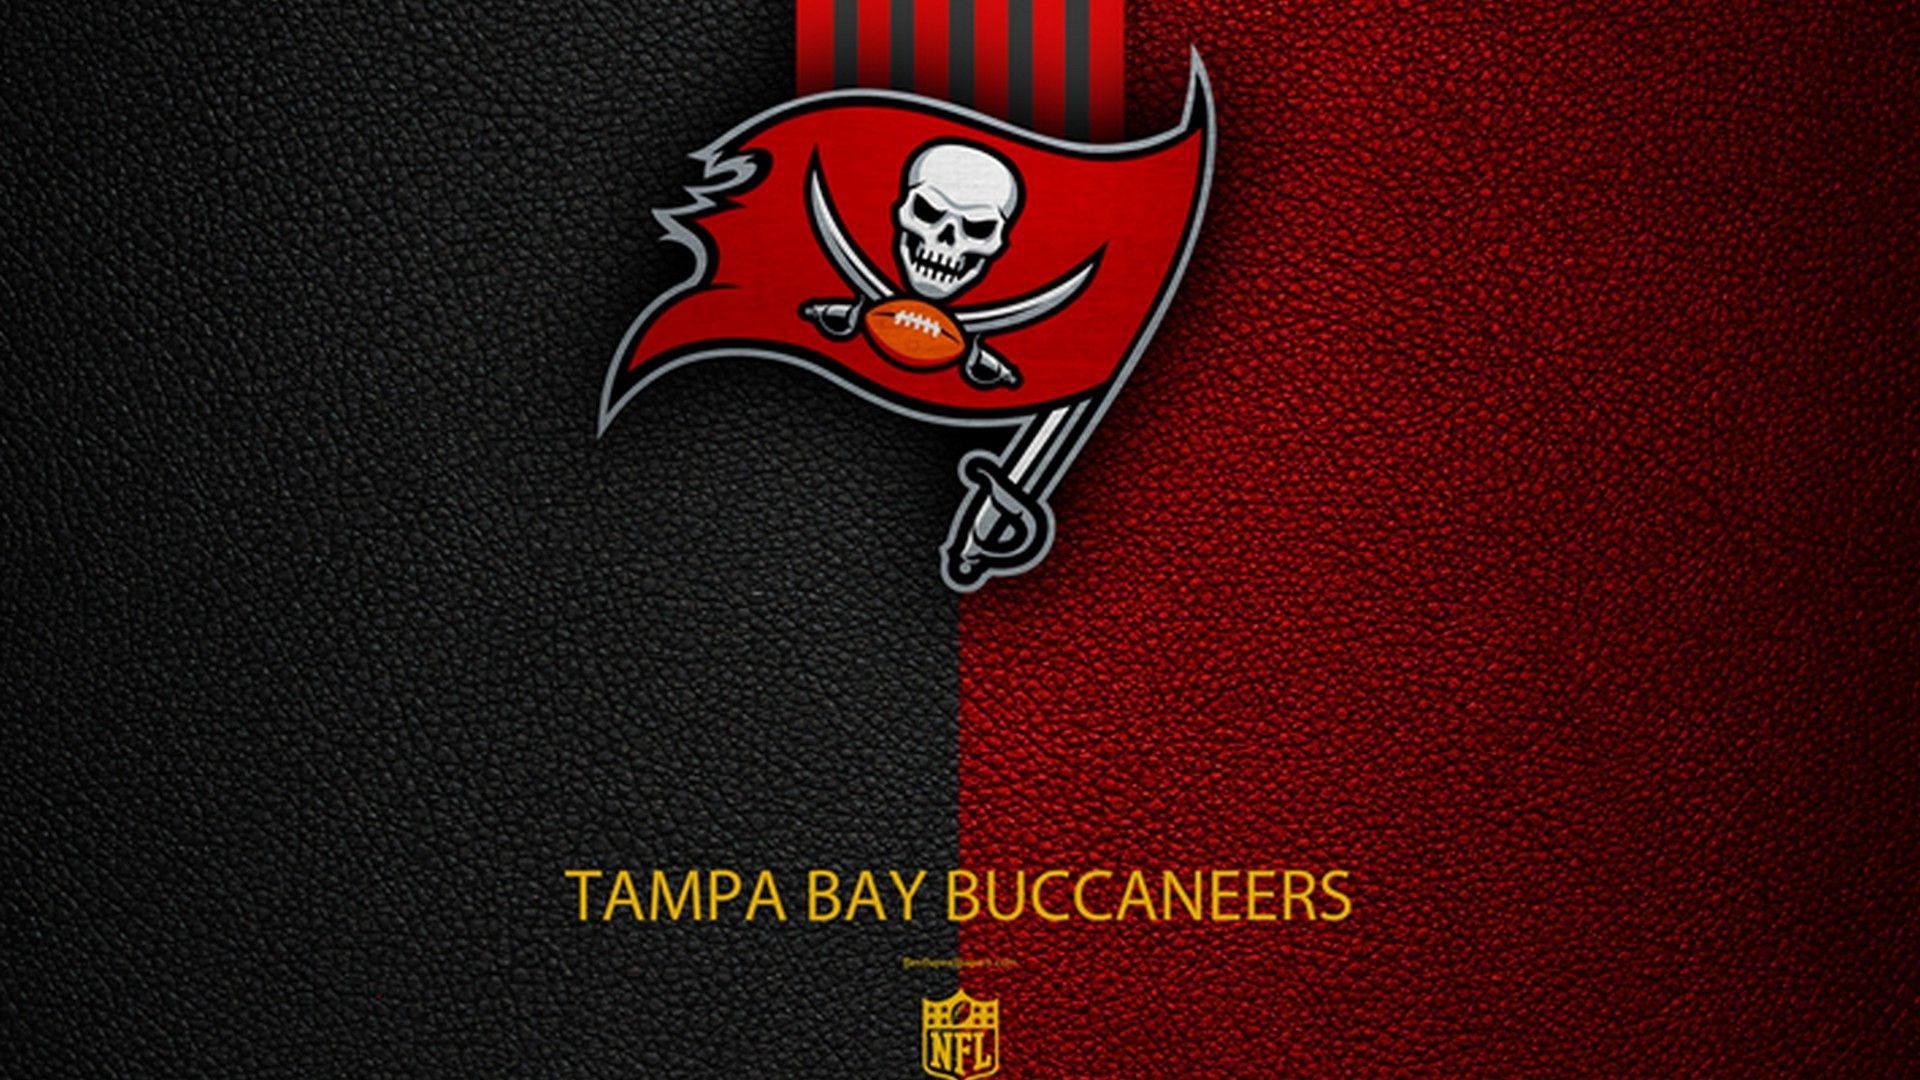 Tampa Bay Buccaneers Wallpaper For Mac Background NFL Football Wallpaper. Nfl football wallpaper, Tampa bay buccaneers, American football